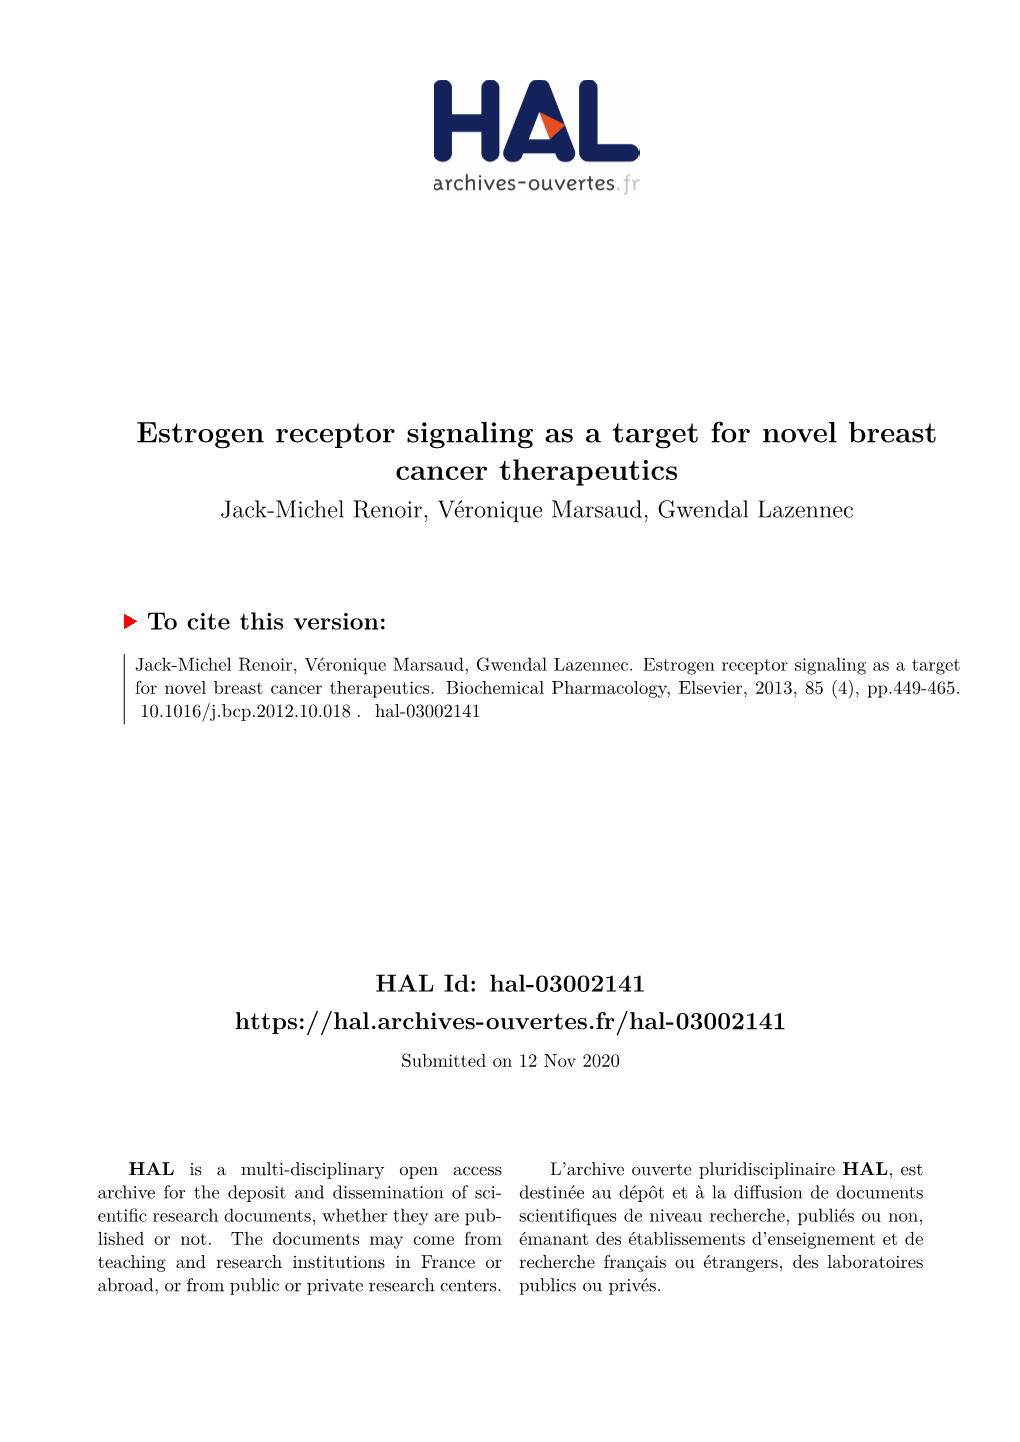 Estrogen Receptor Signaling As a Target for Novel Breast Cancer Therapeutics Jack-Michel Renoir, Véronique Marsaud, Gwendal Lazennec